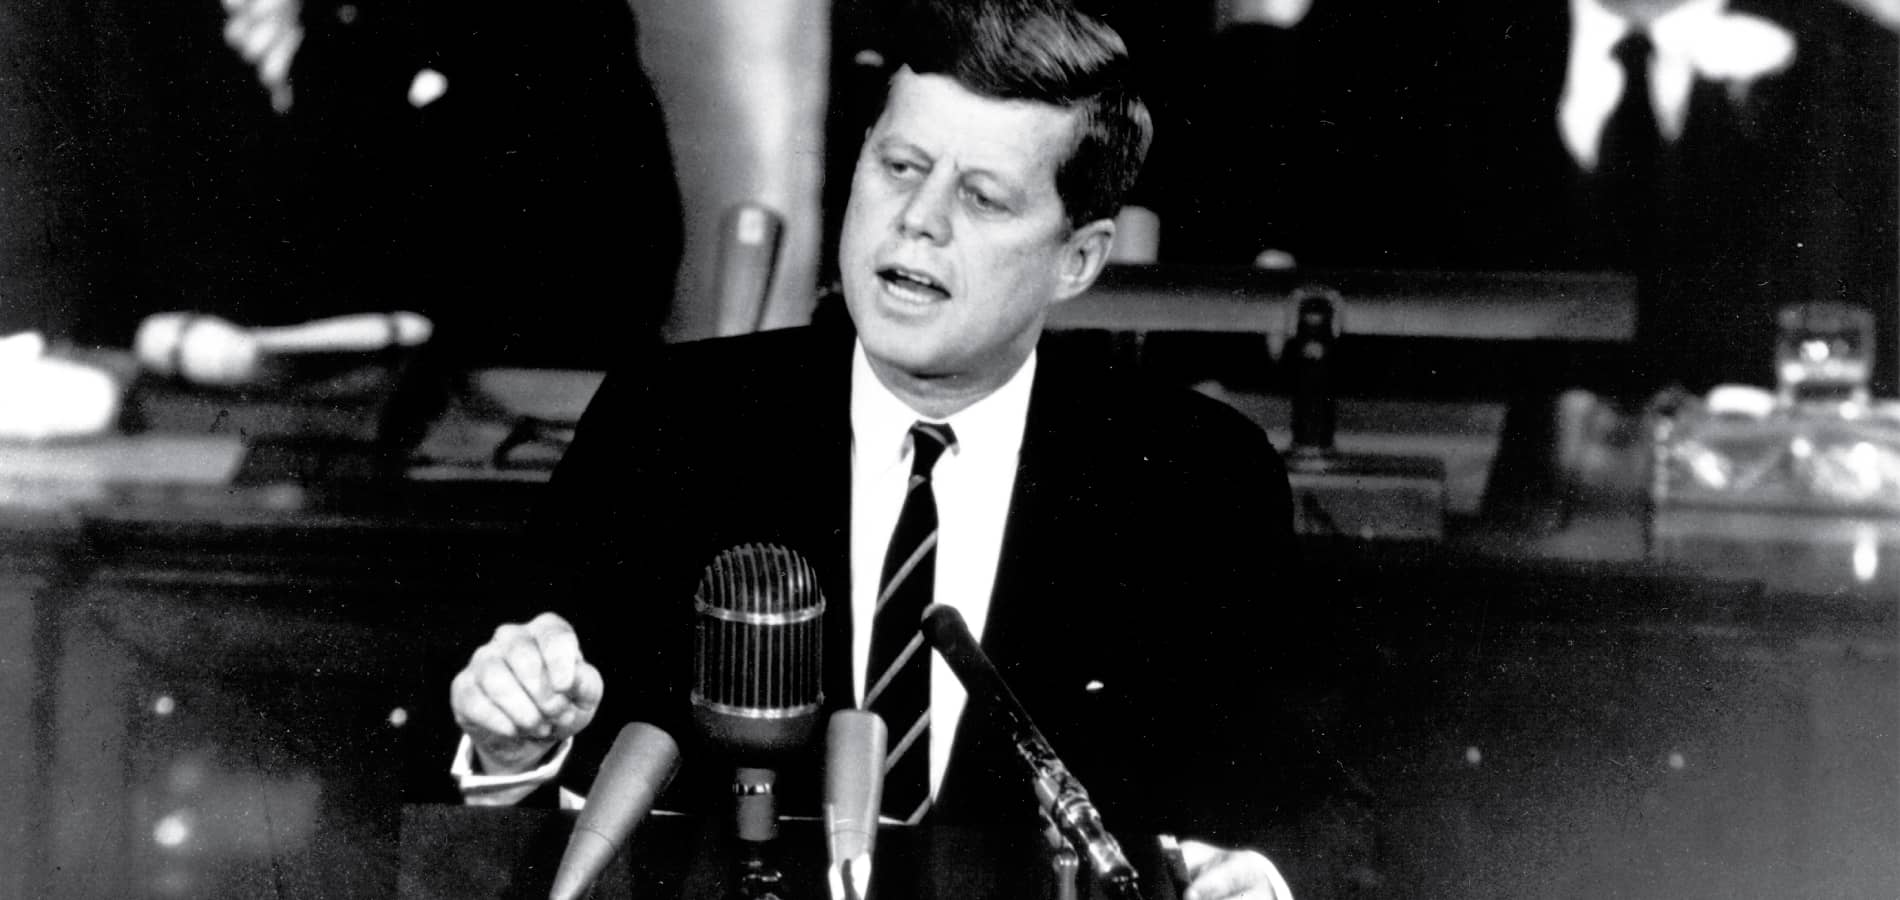 image of John F. Kennedy